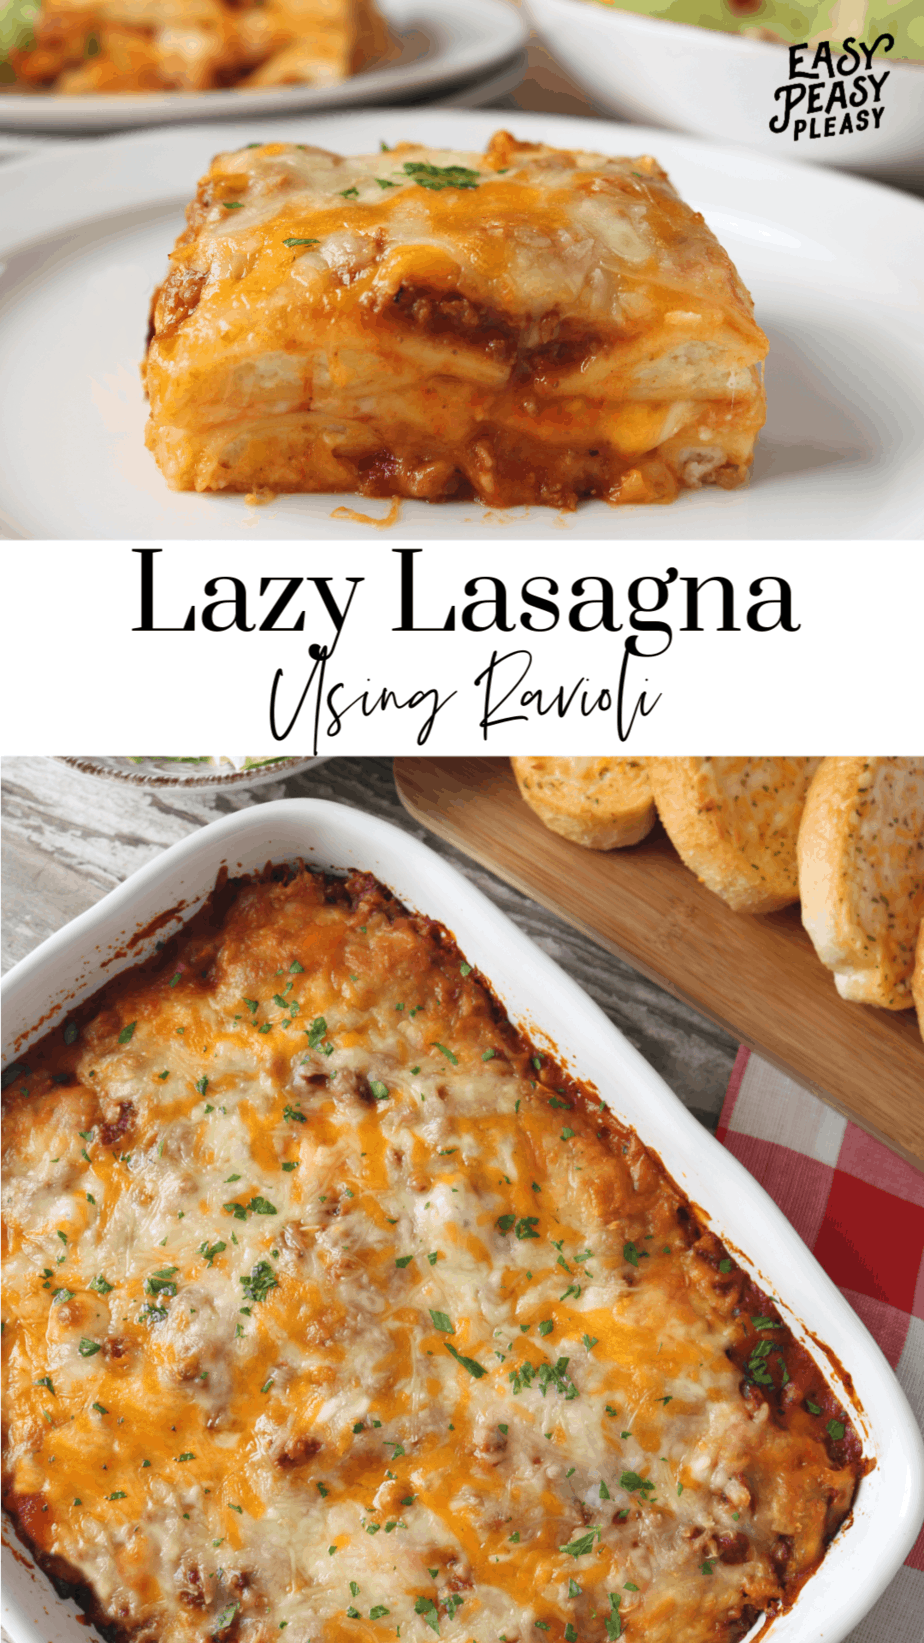 Lazy Lasagna Ravioli Using 5 Ingredients - Easy Peasy Pleasy